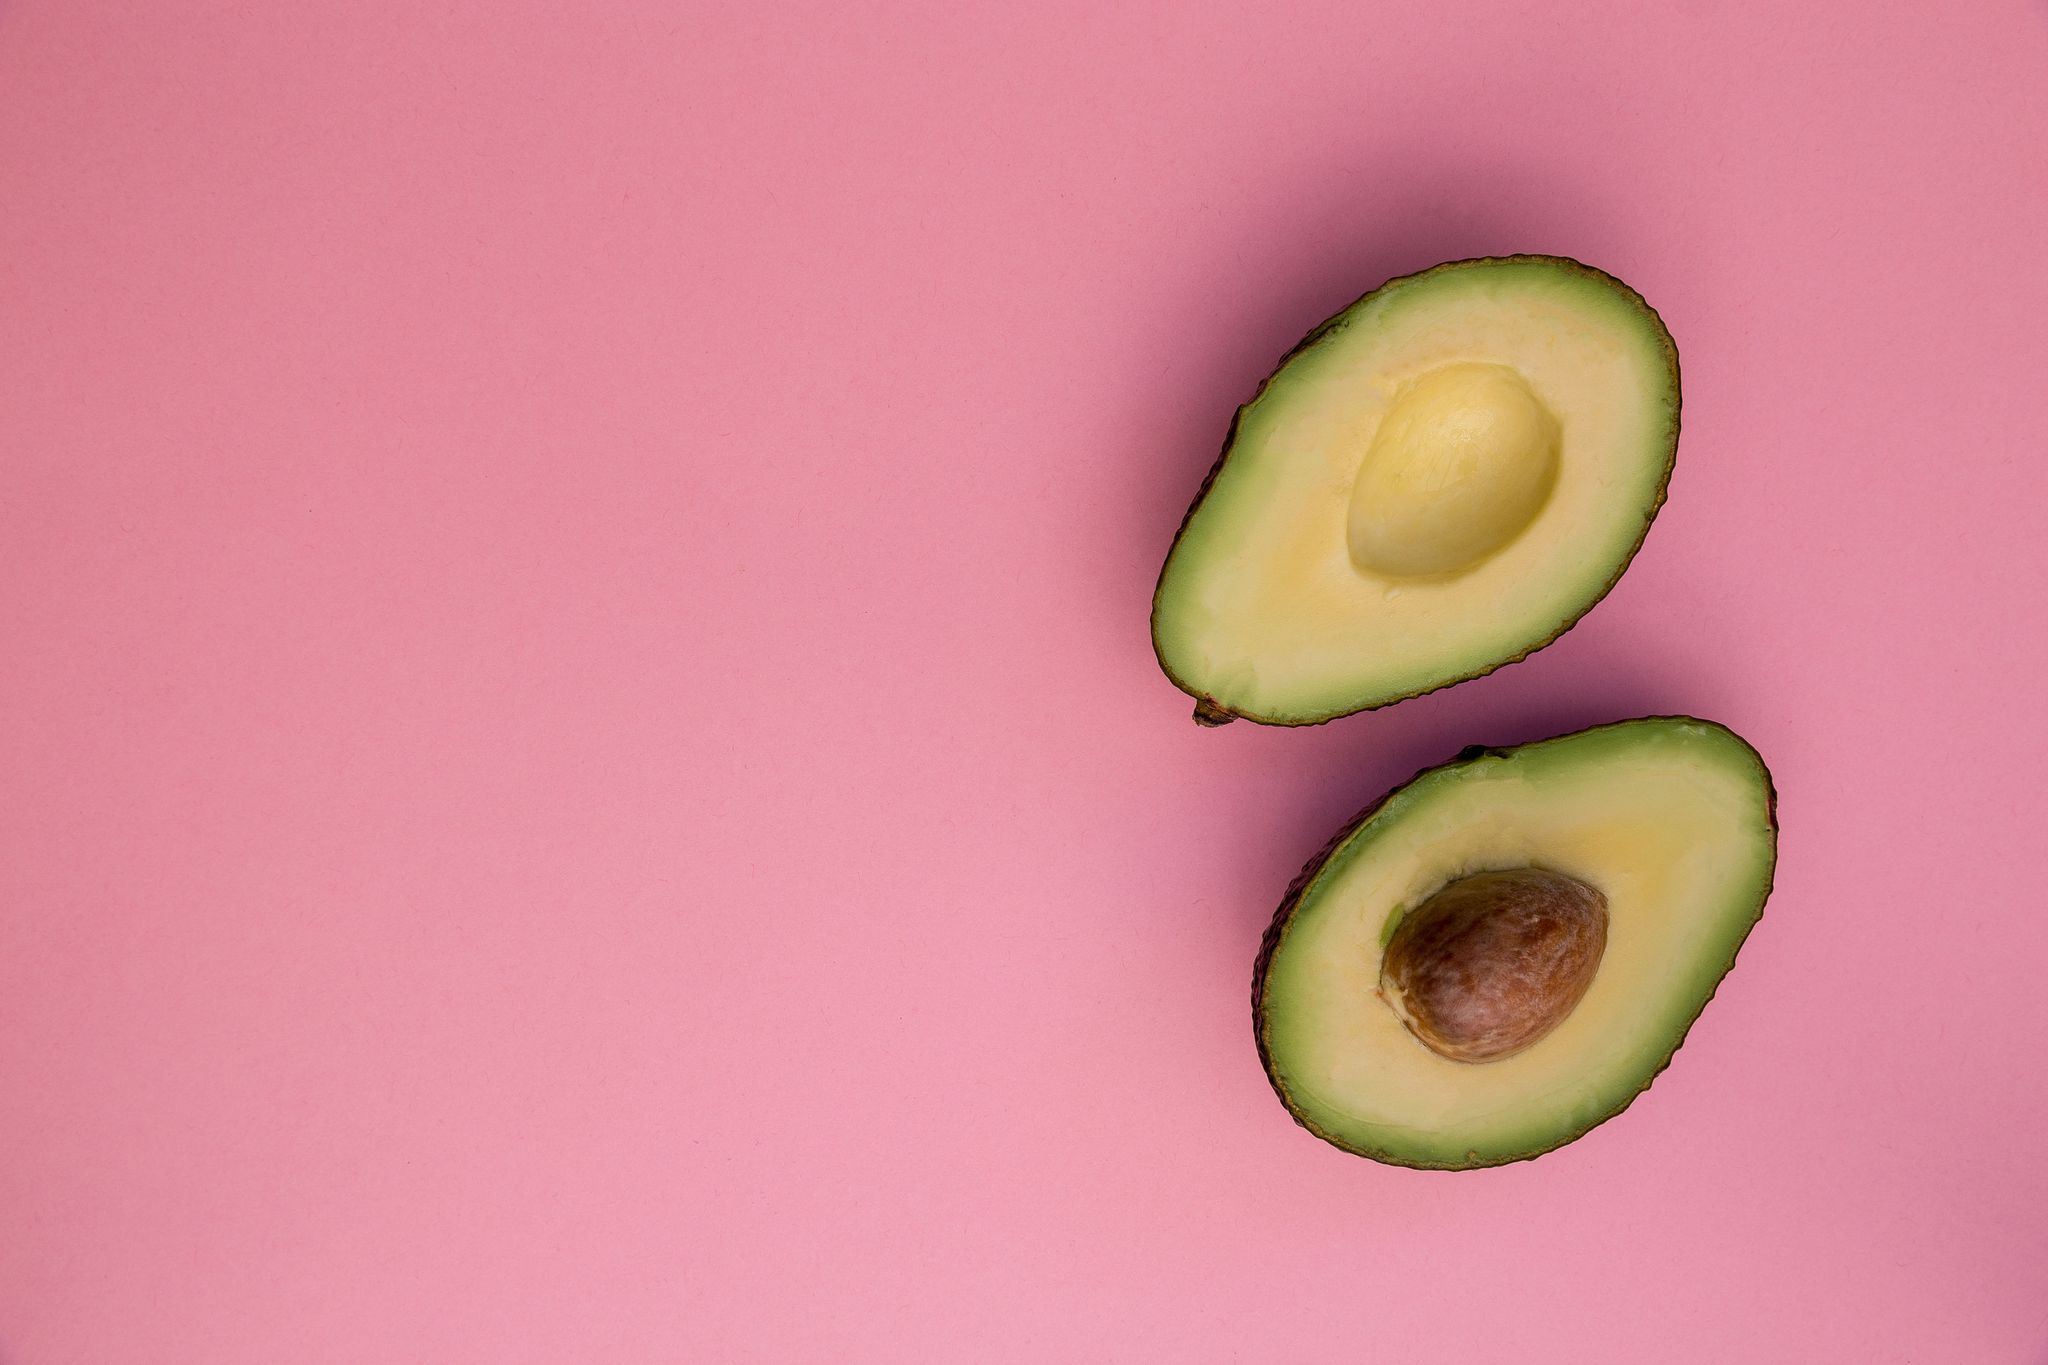 avocado skin - women's health uk 